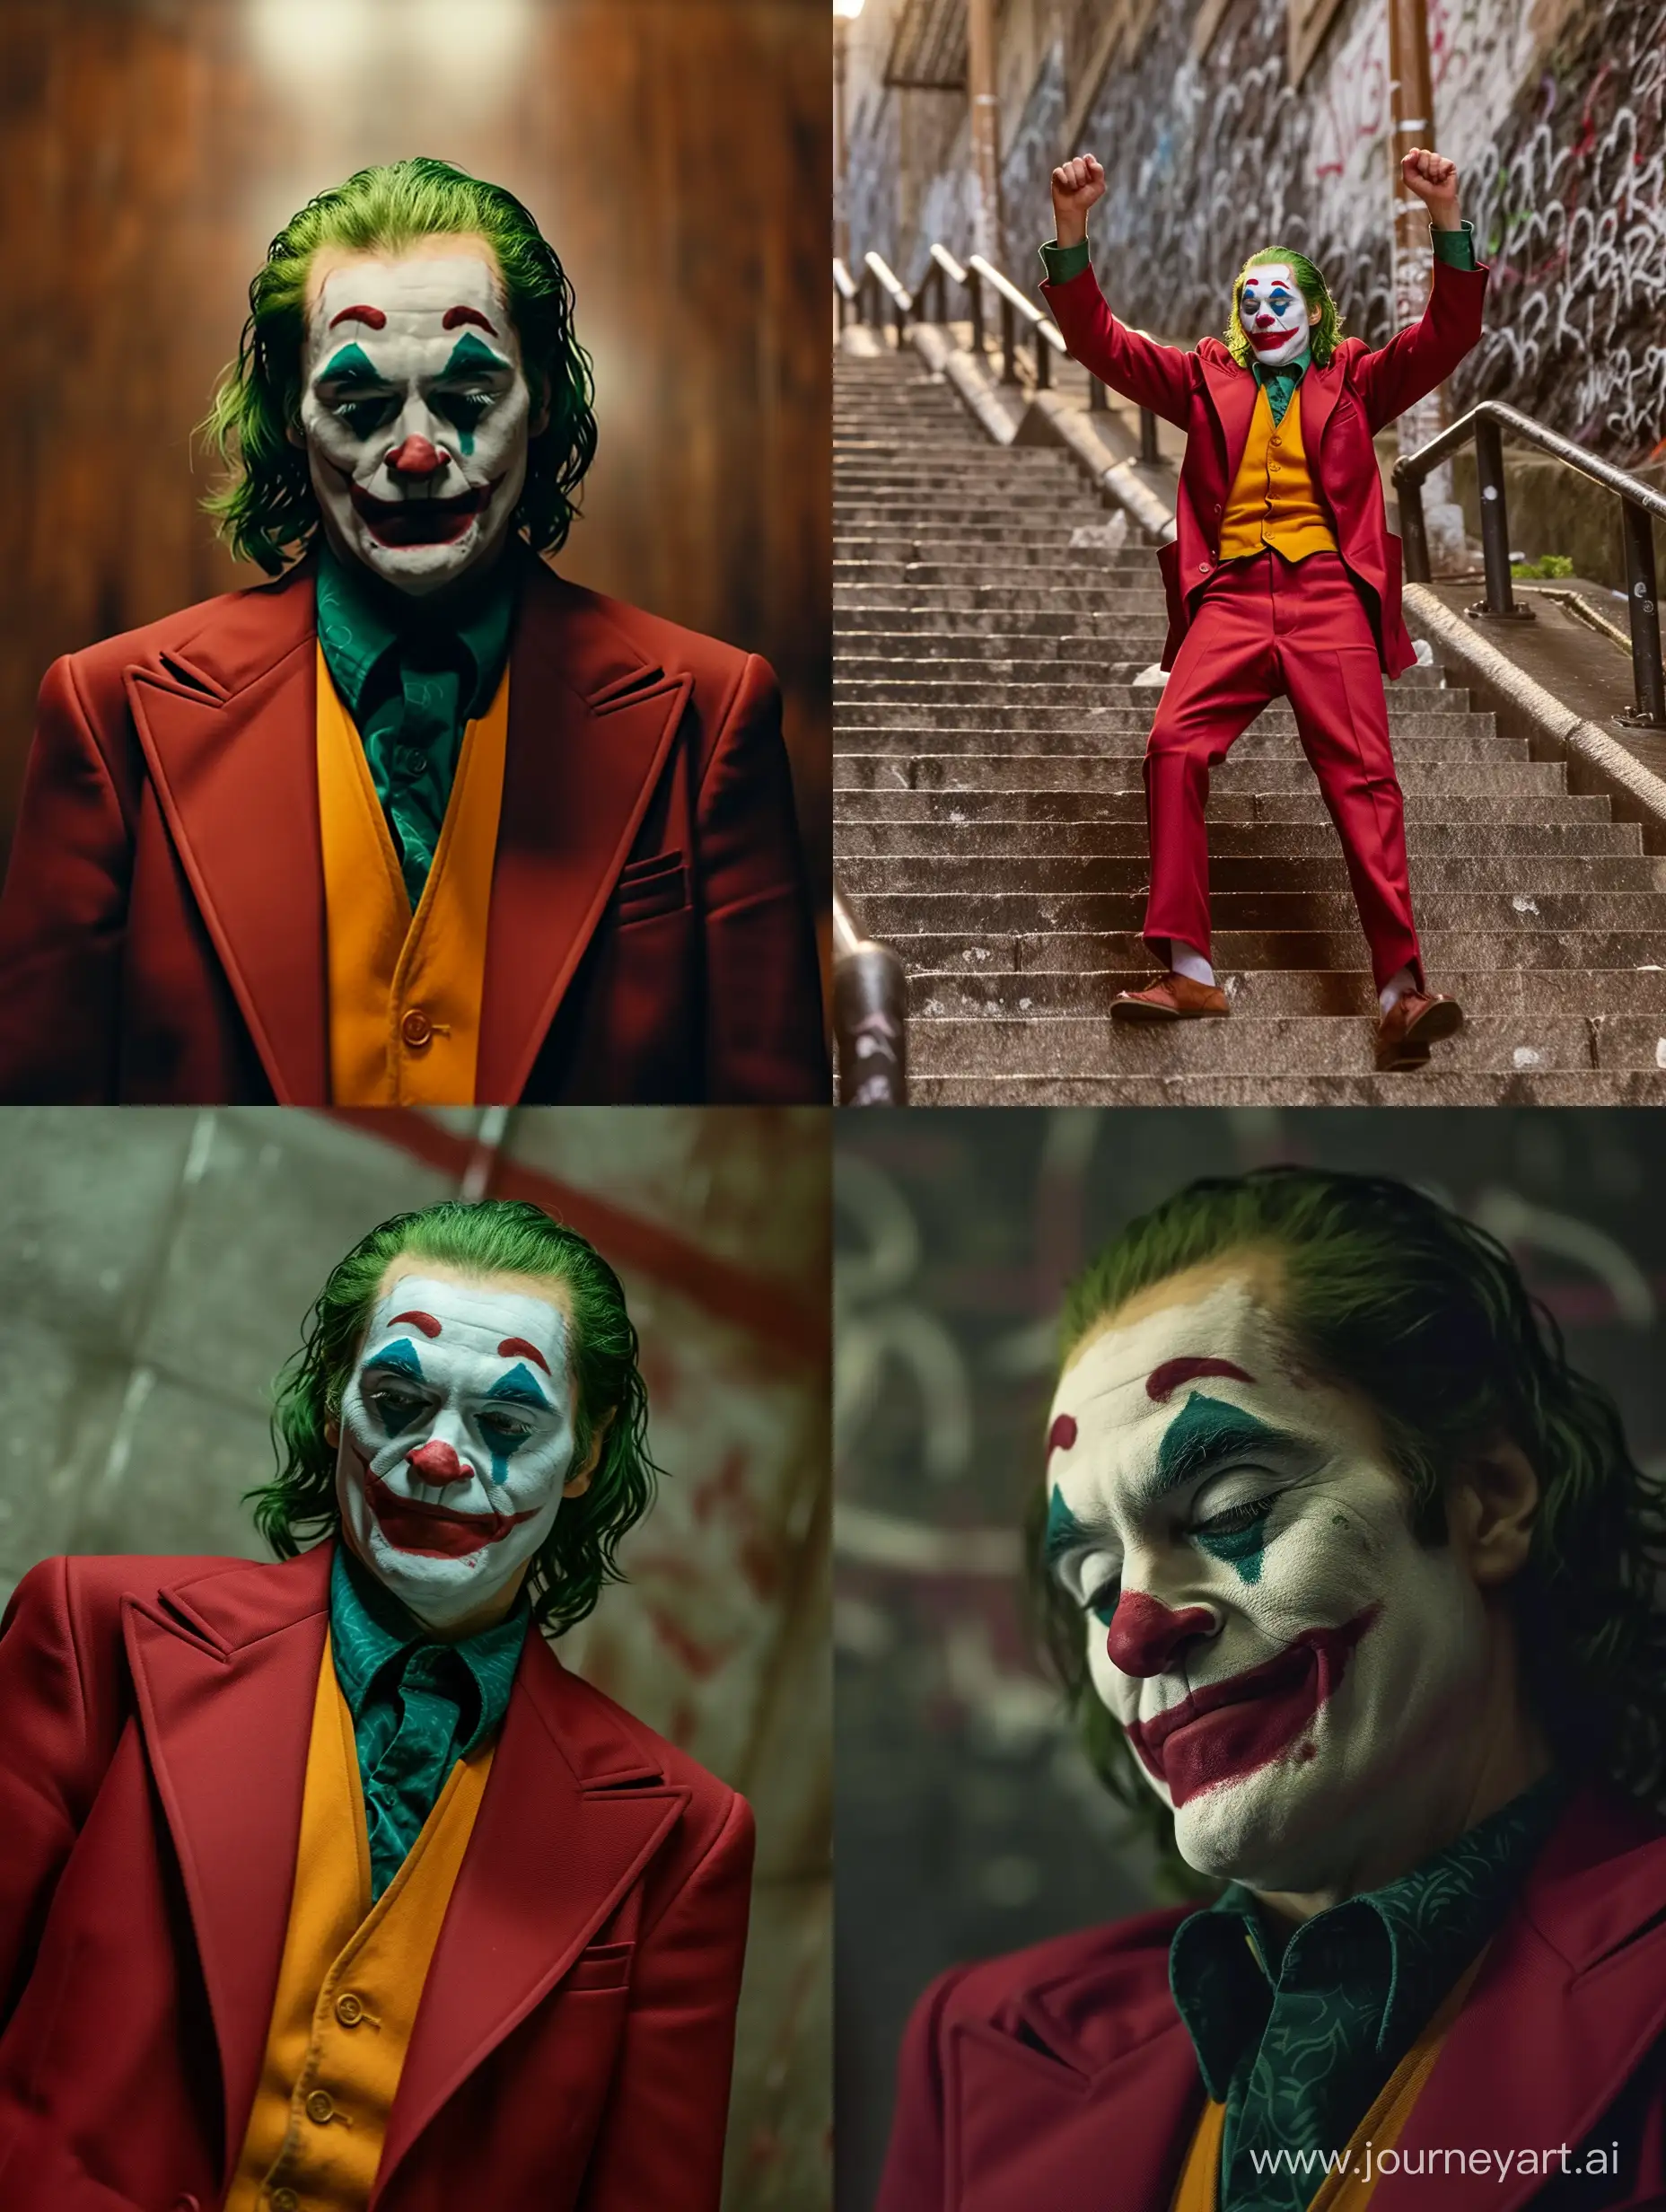 Joker-2019-Movie-Still-Darkly-Captivating-Portrait-of-Joaquin-Phoenix-as-the-Iconic-Villain